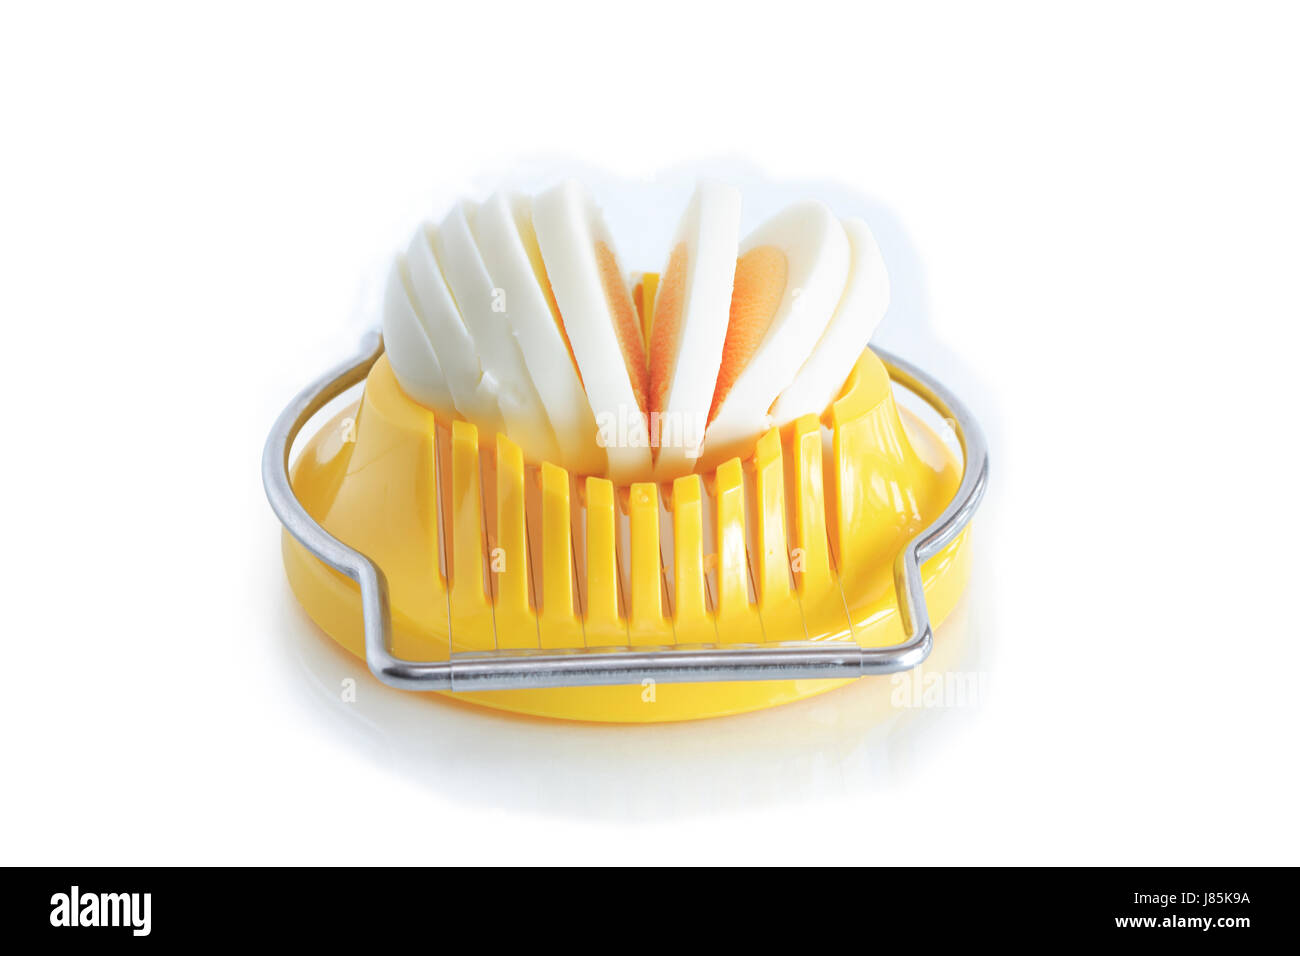 Modern yellow egg slicer on white background Stock Photo - Alamy